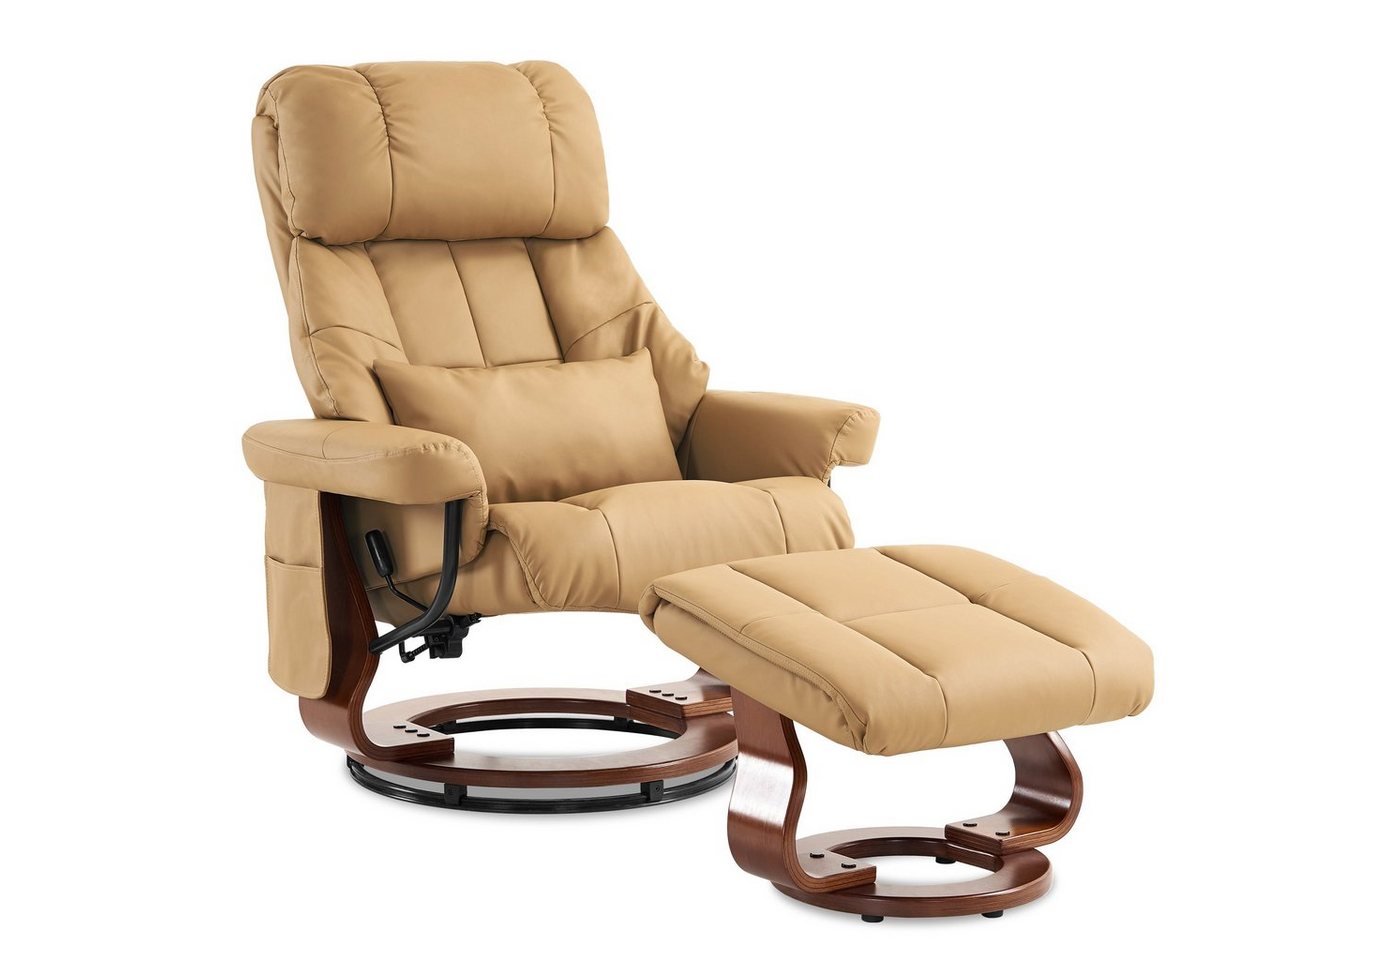 MCombo Relaxsessel MCombo Massagesessel mit Hocker 9068, 360°drehbarer Relaxsessel mit Liegefunktion von MCombo